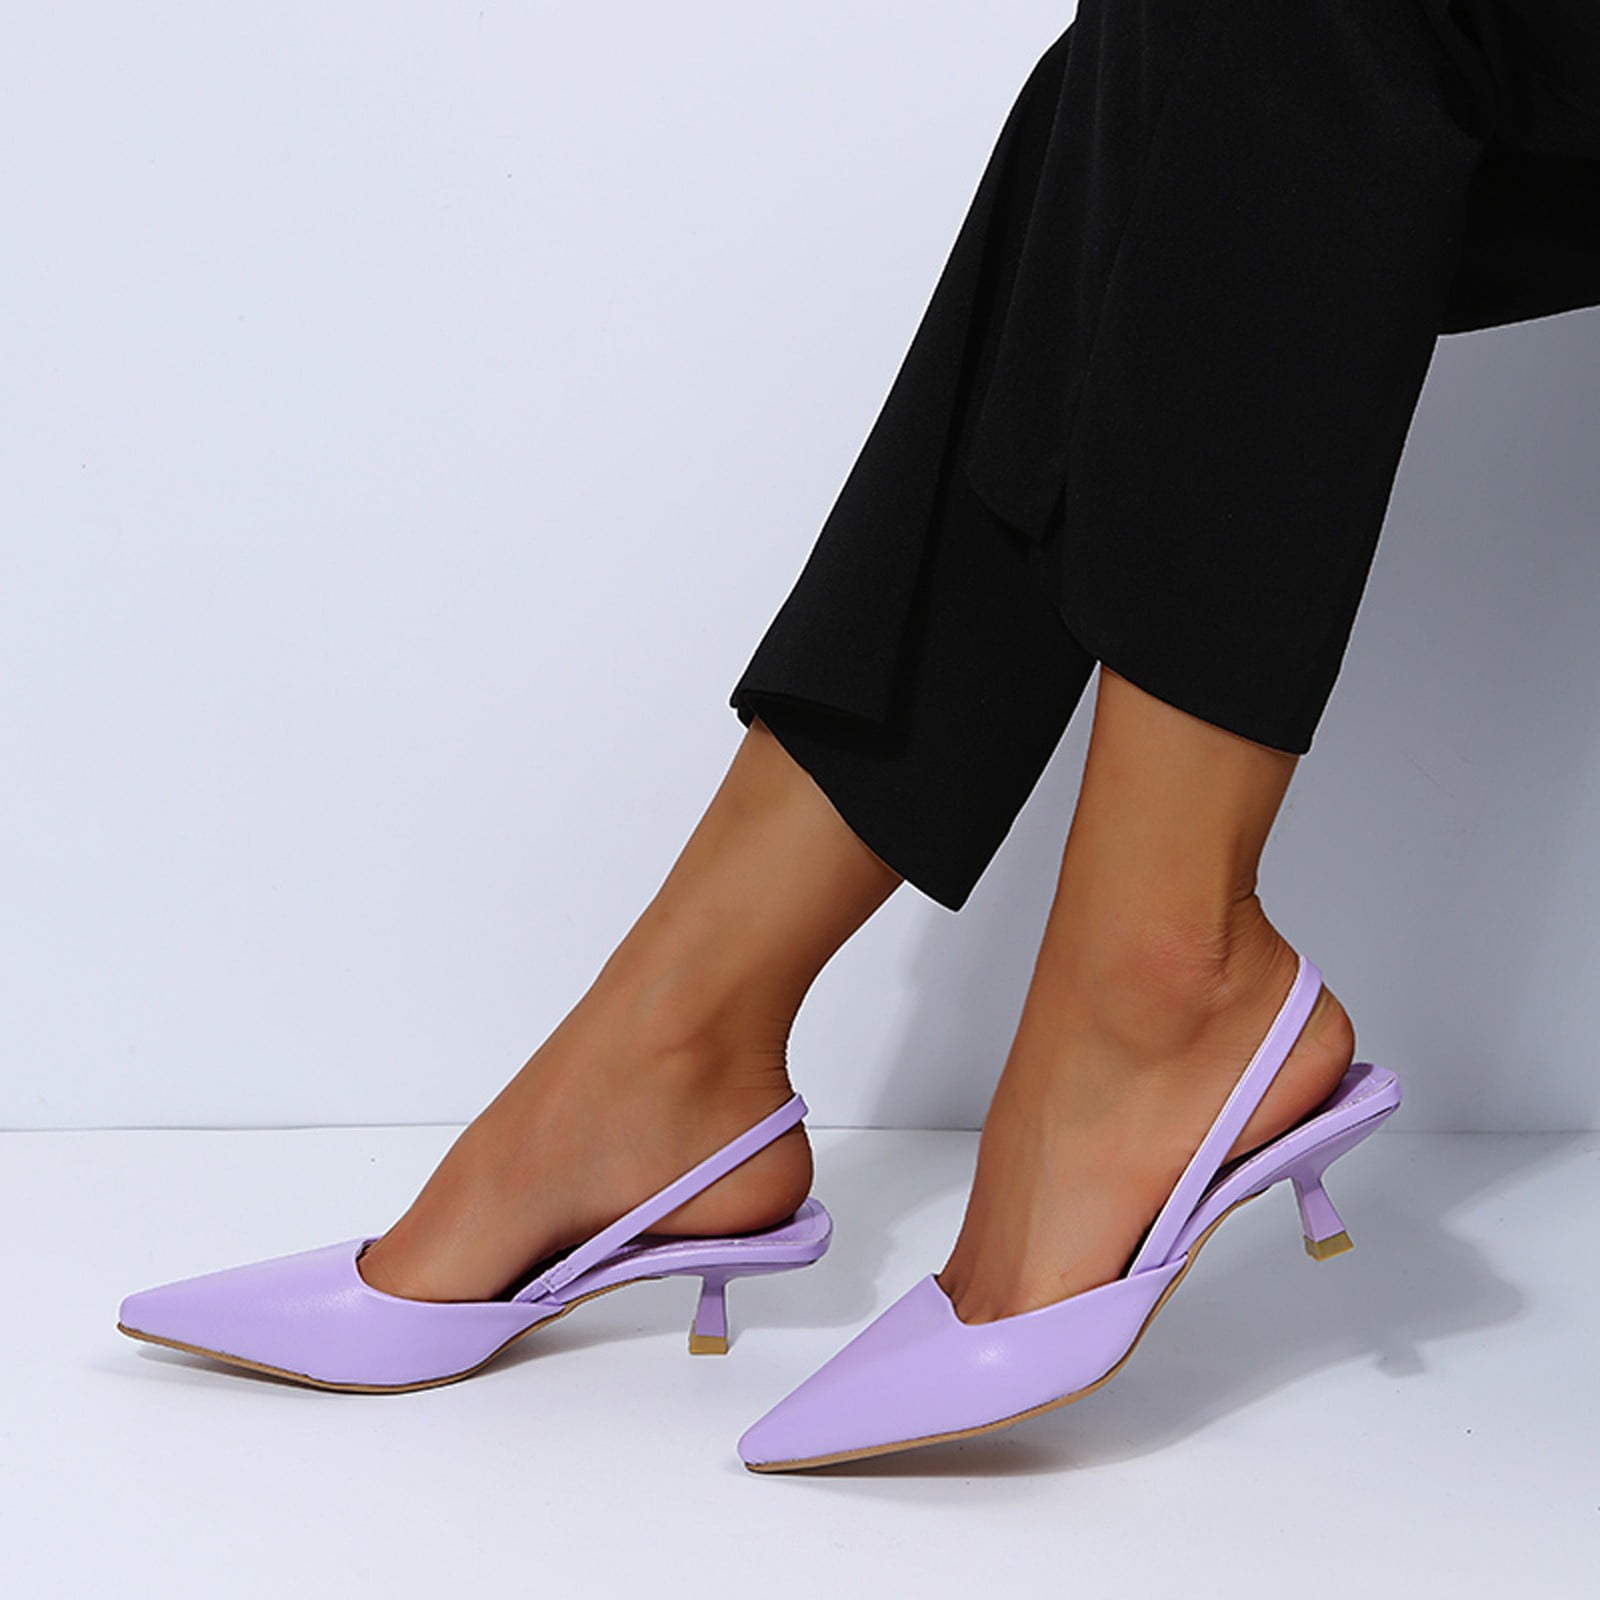 Sexy Lilac Suede Heels - Ankle Strap Heels - Single Sole Heel - Lulus